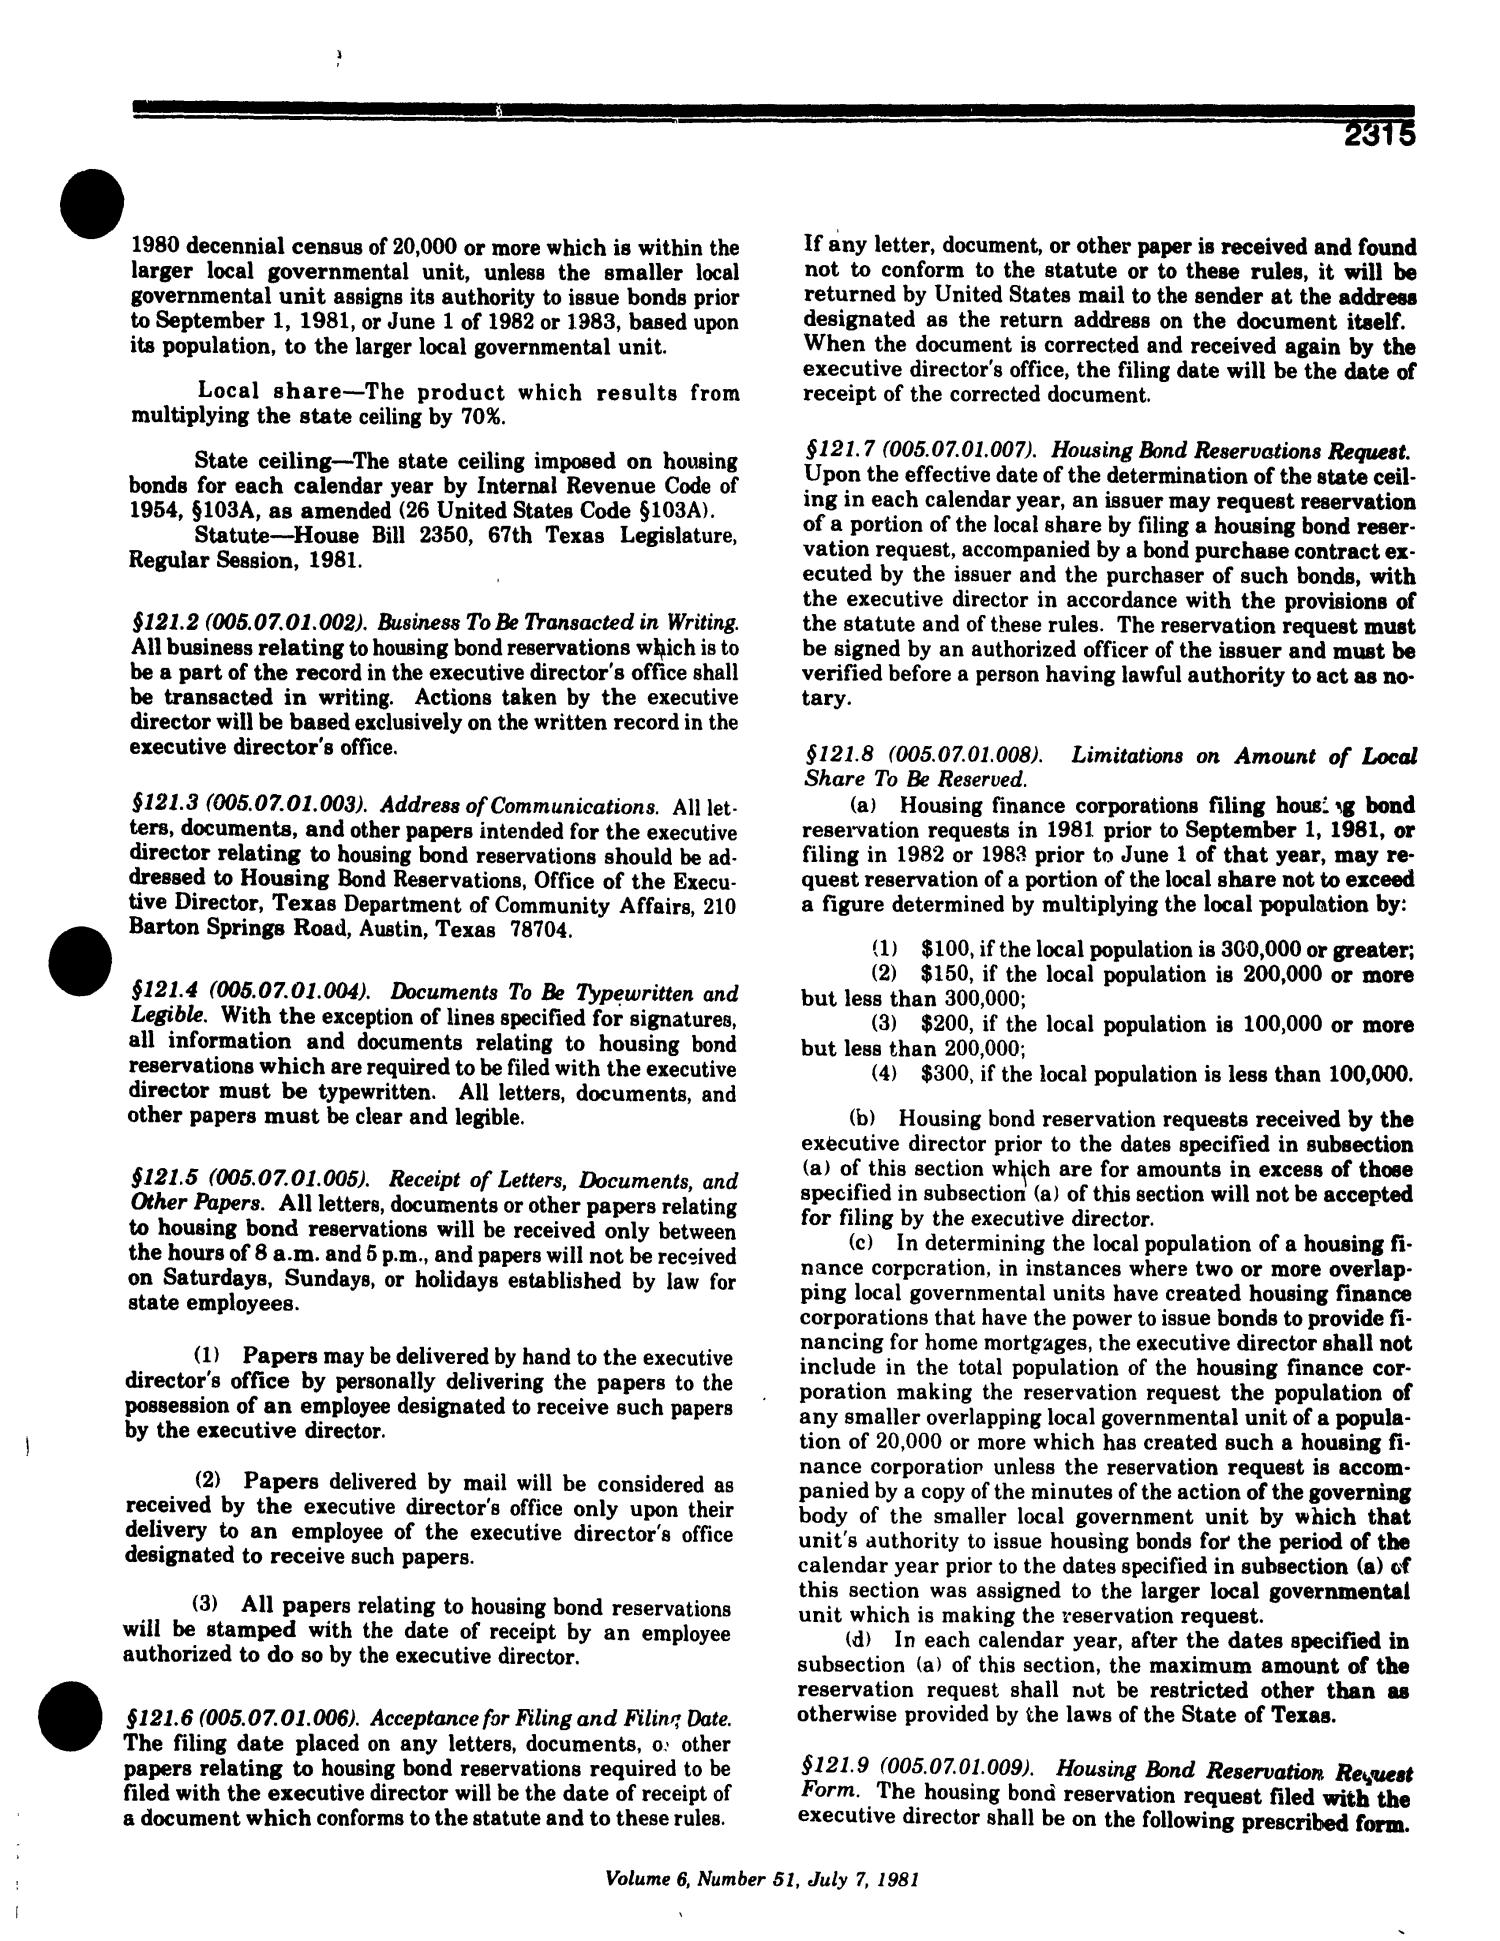 Texas Register, Volume 6, Number 51, Pages 2309-2366, July 7, 1981
                                                
                                                    2315
                                                